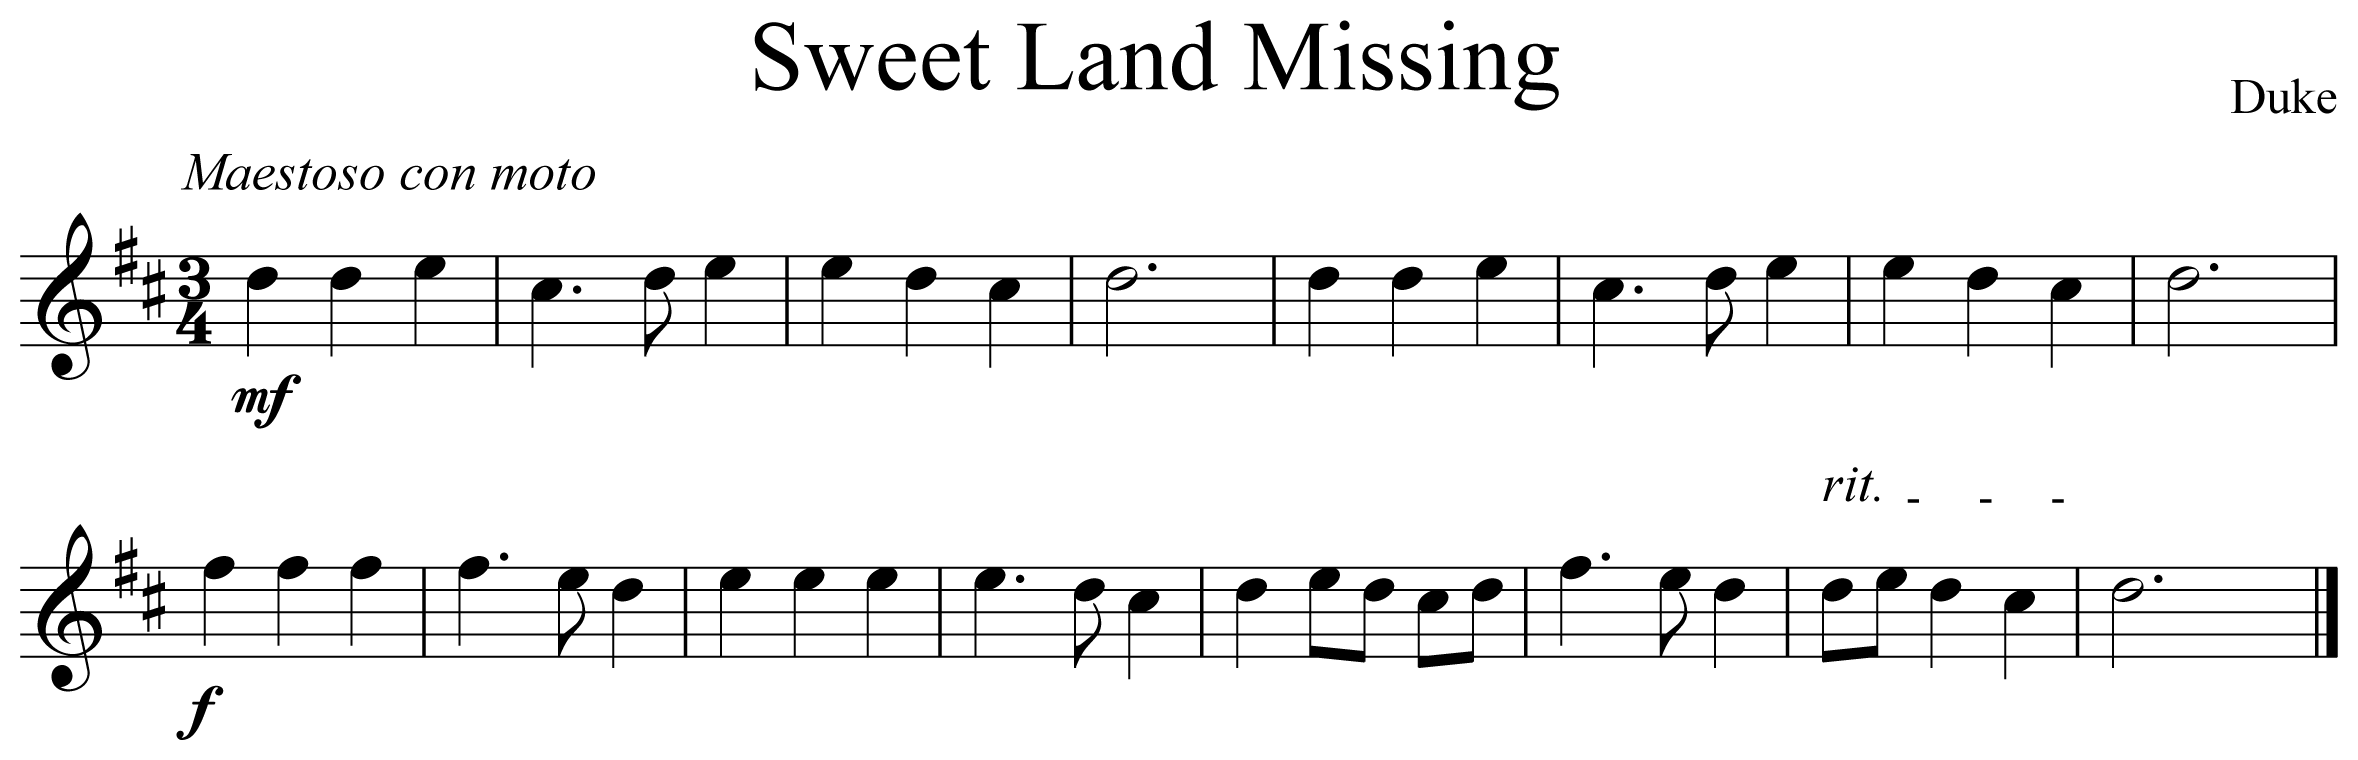 Sweet Land Missing Notation Saxophone